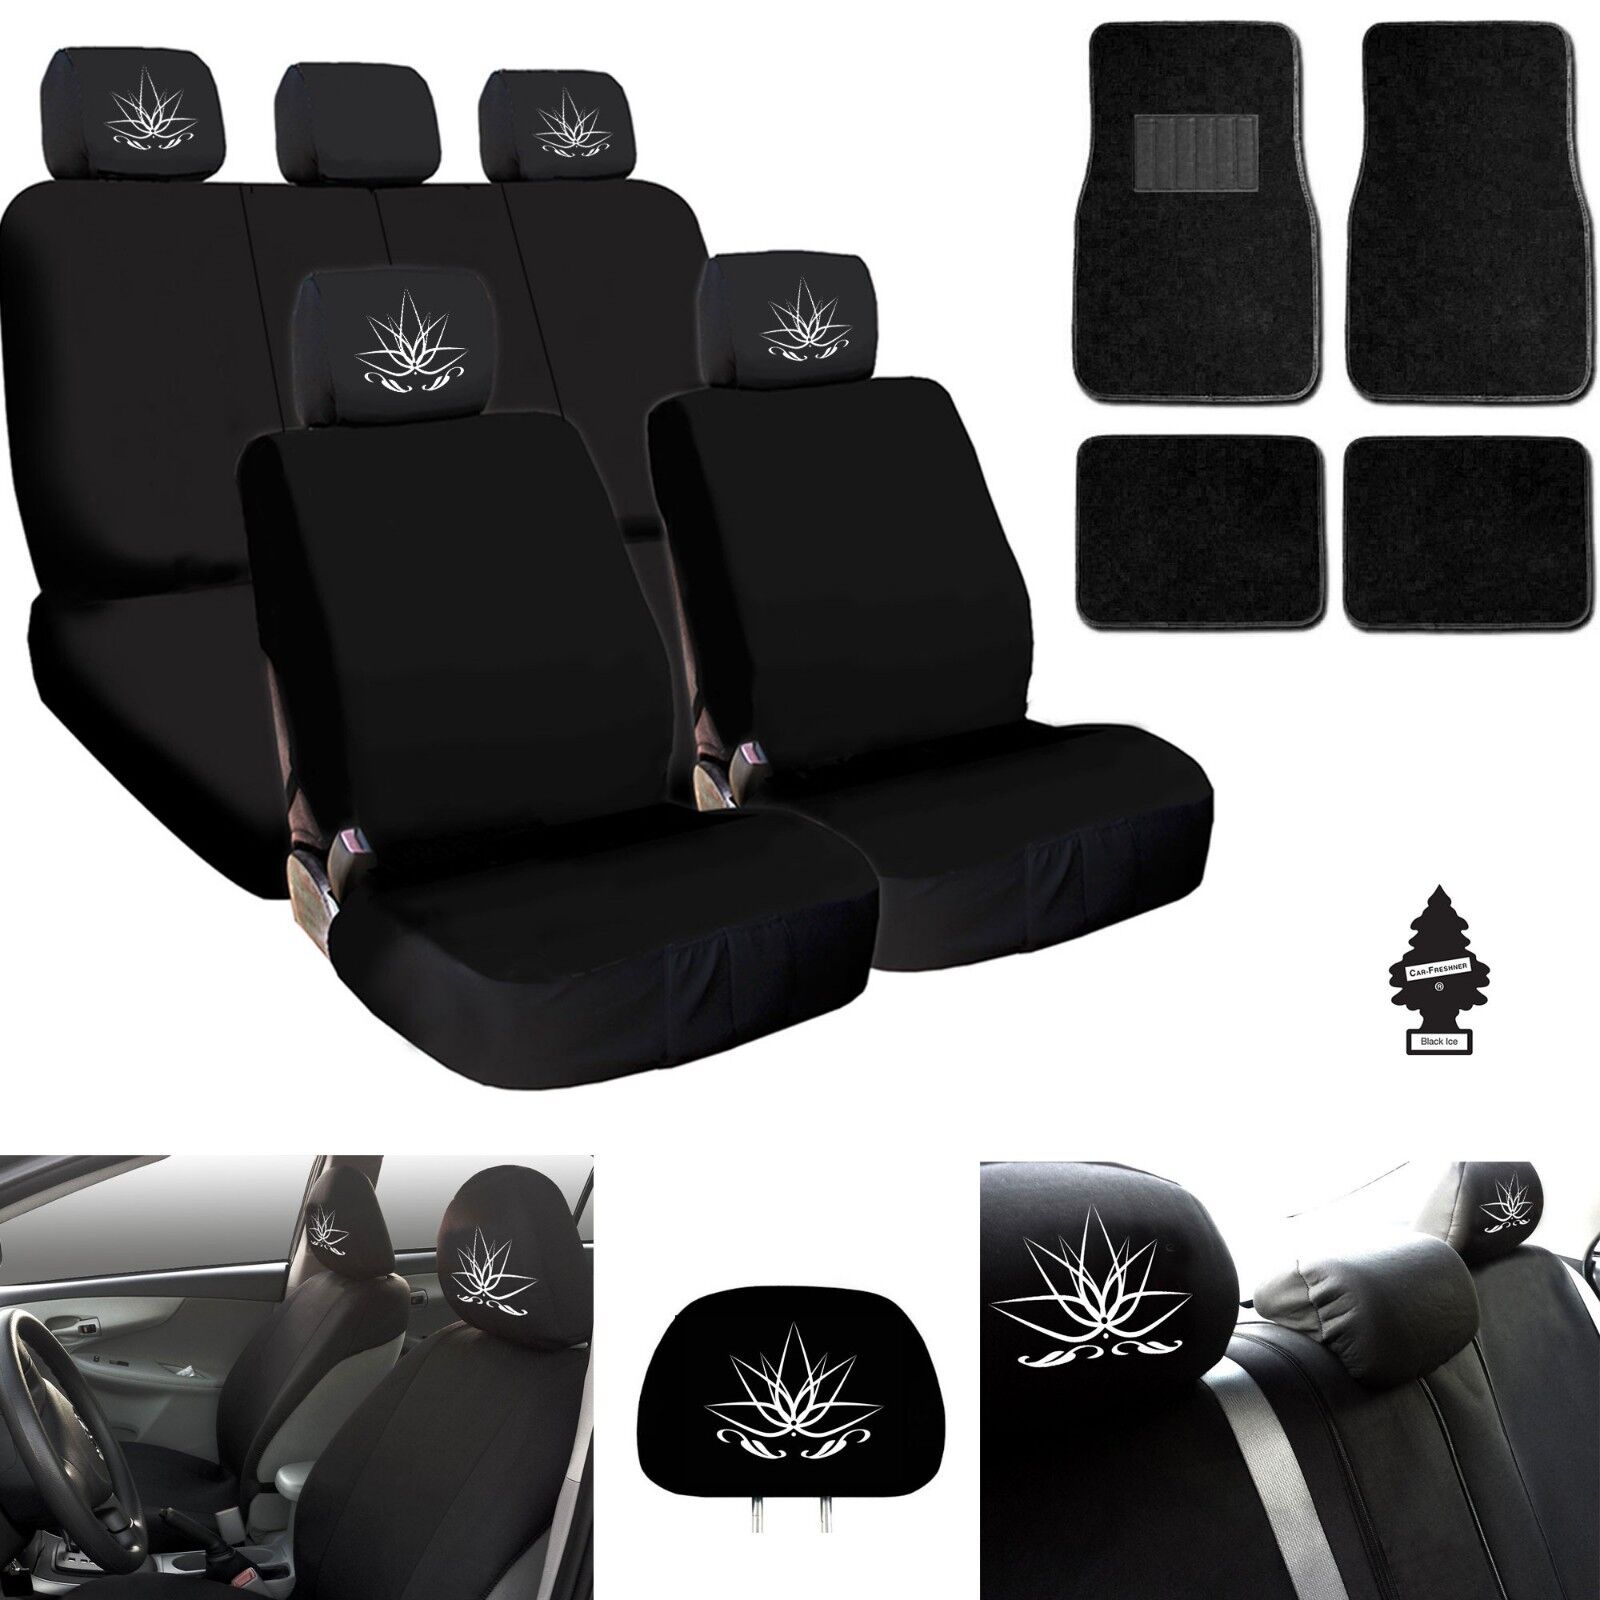 For Hyundai New Lotus Car Truck SUV Seat Covers Headrest Floor Mats Full Set 